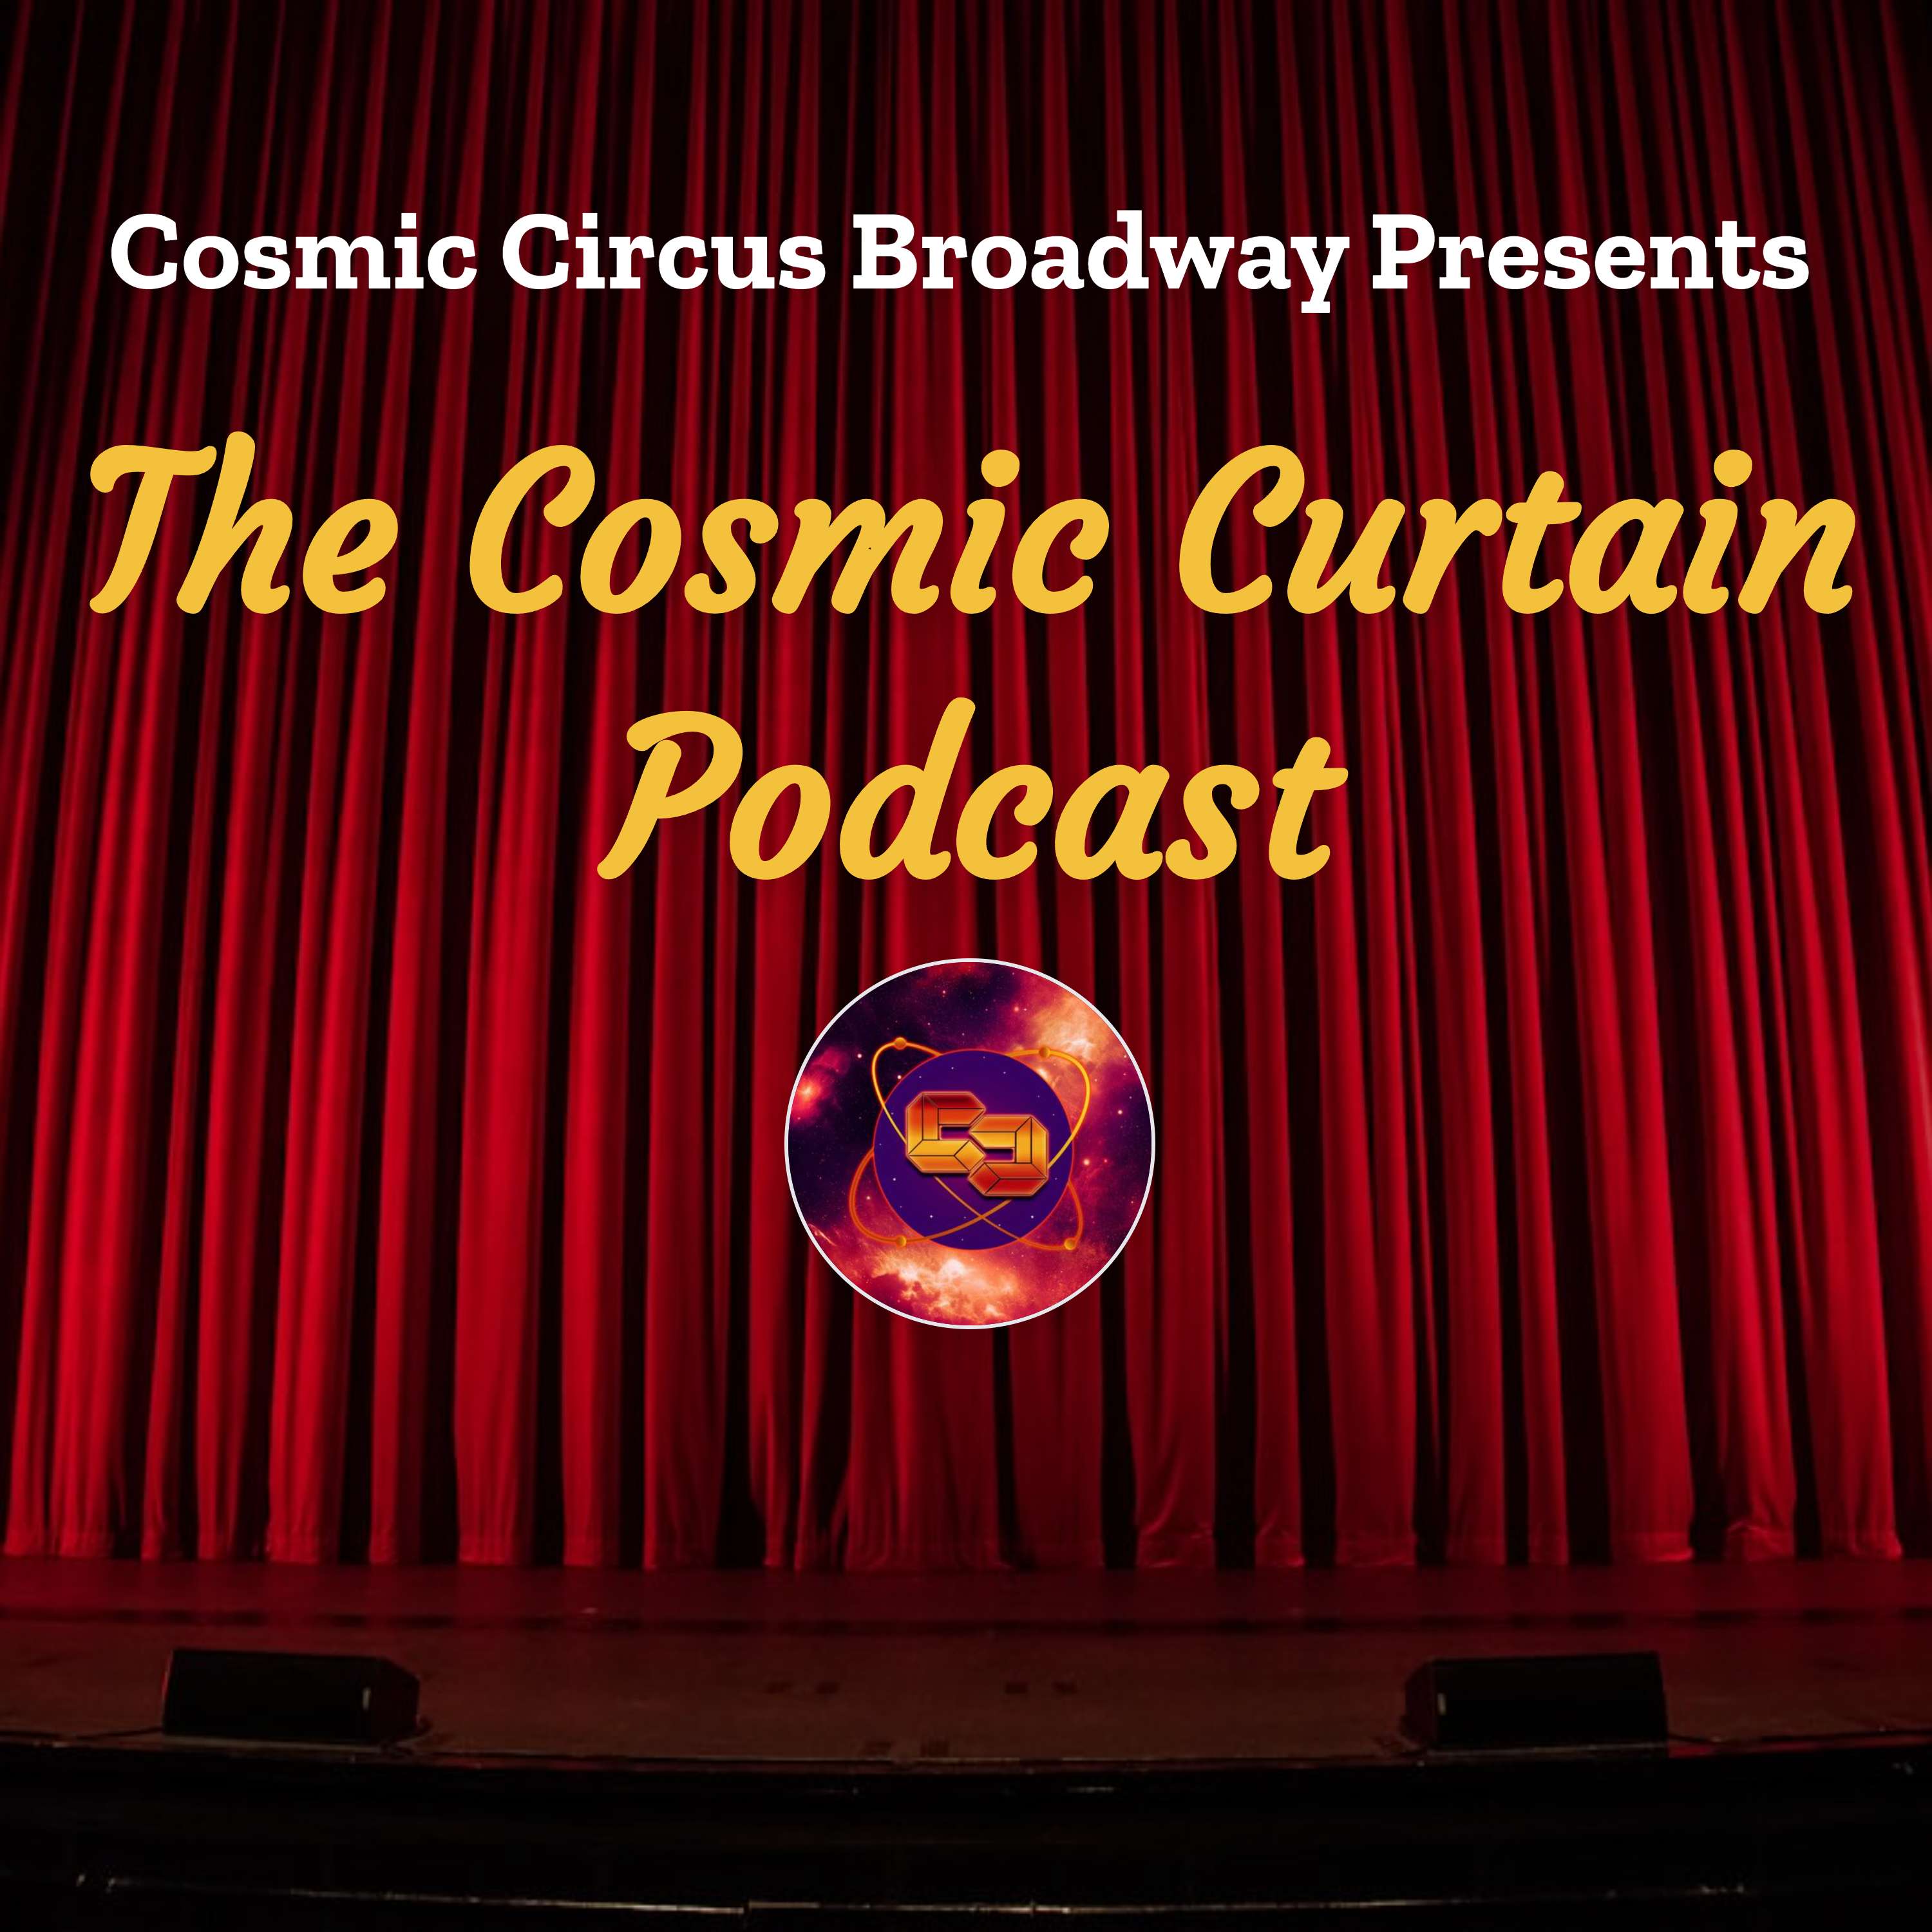 The Cosmic Curtain